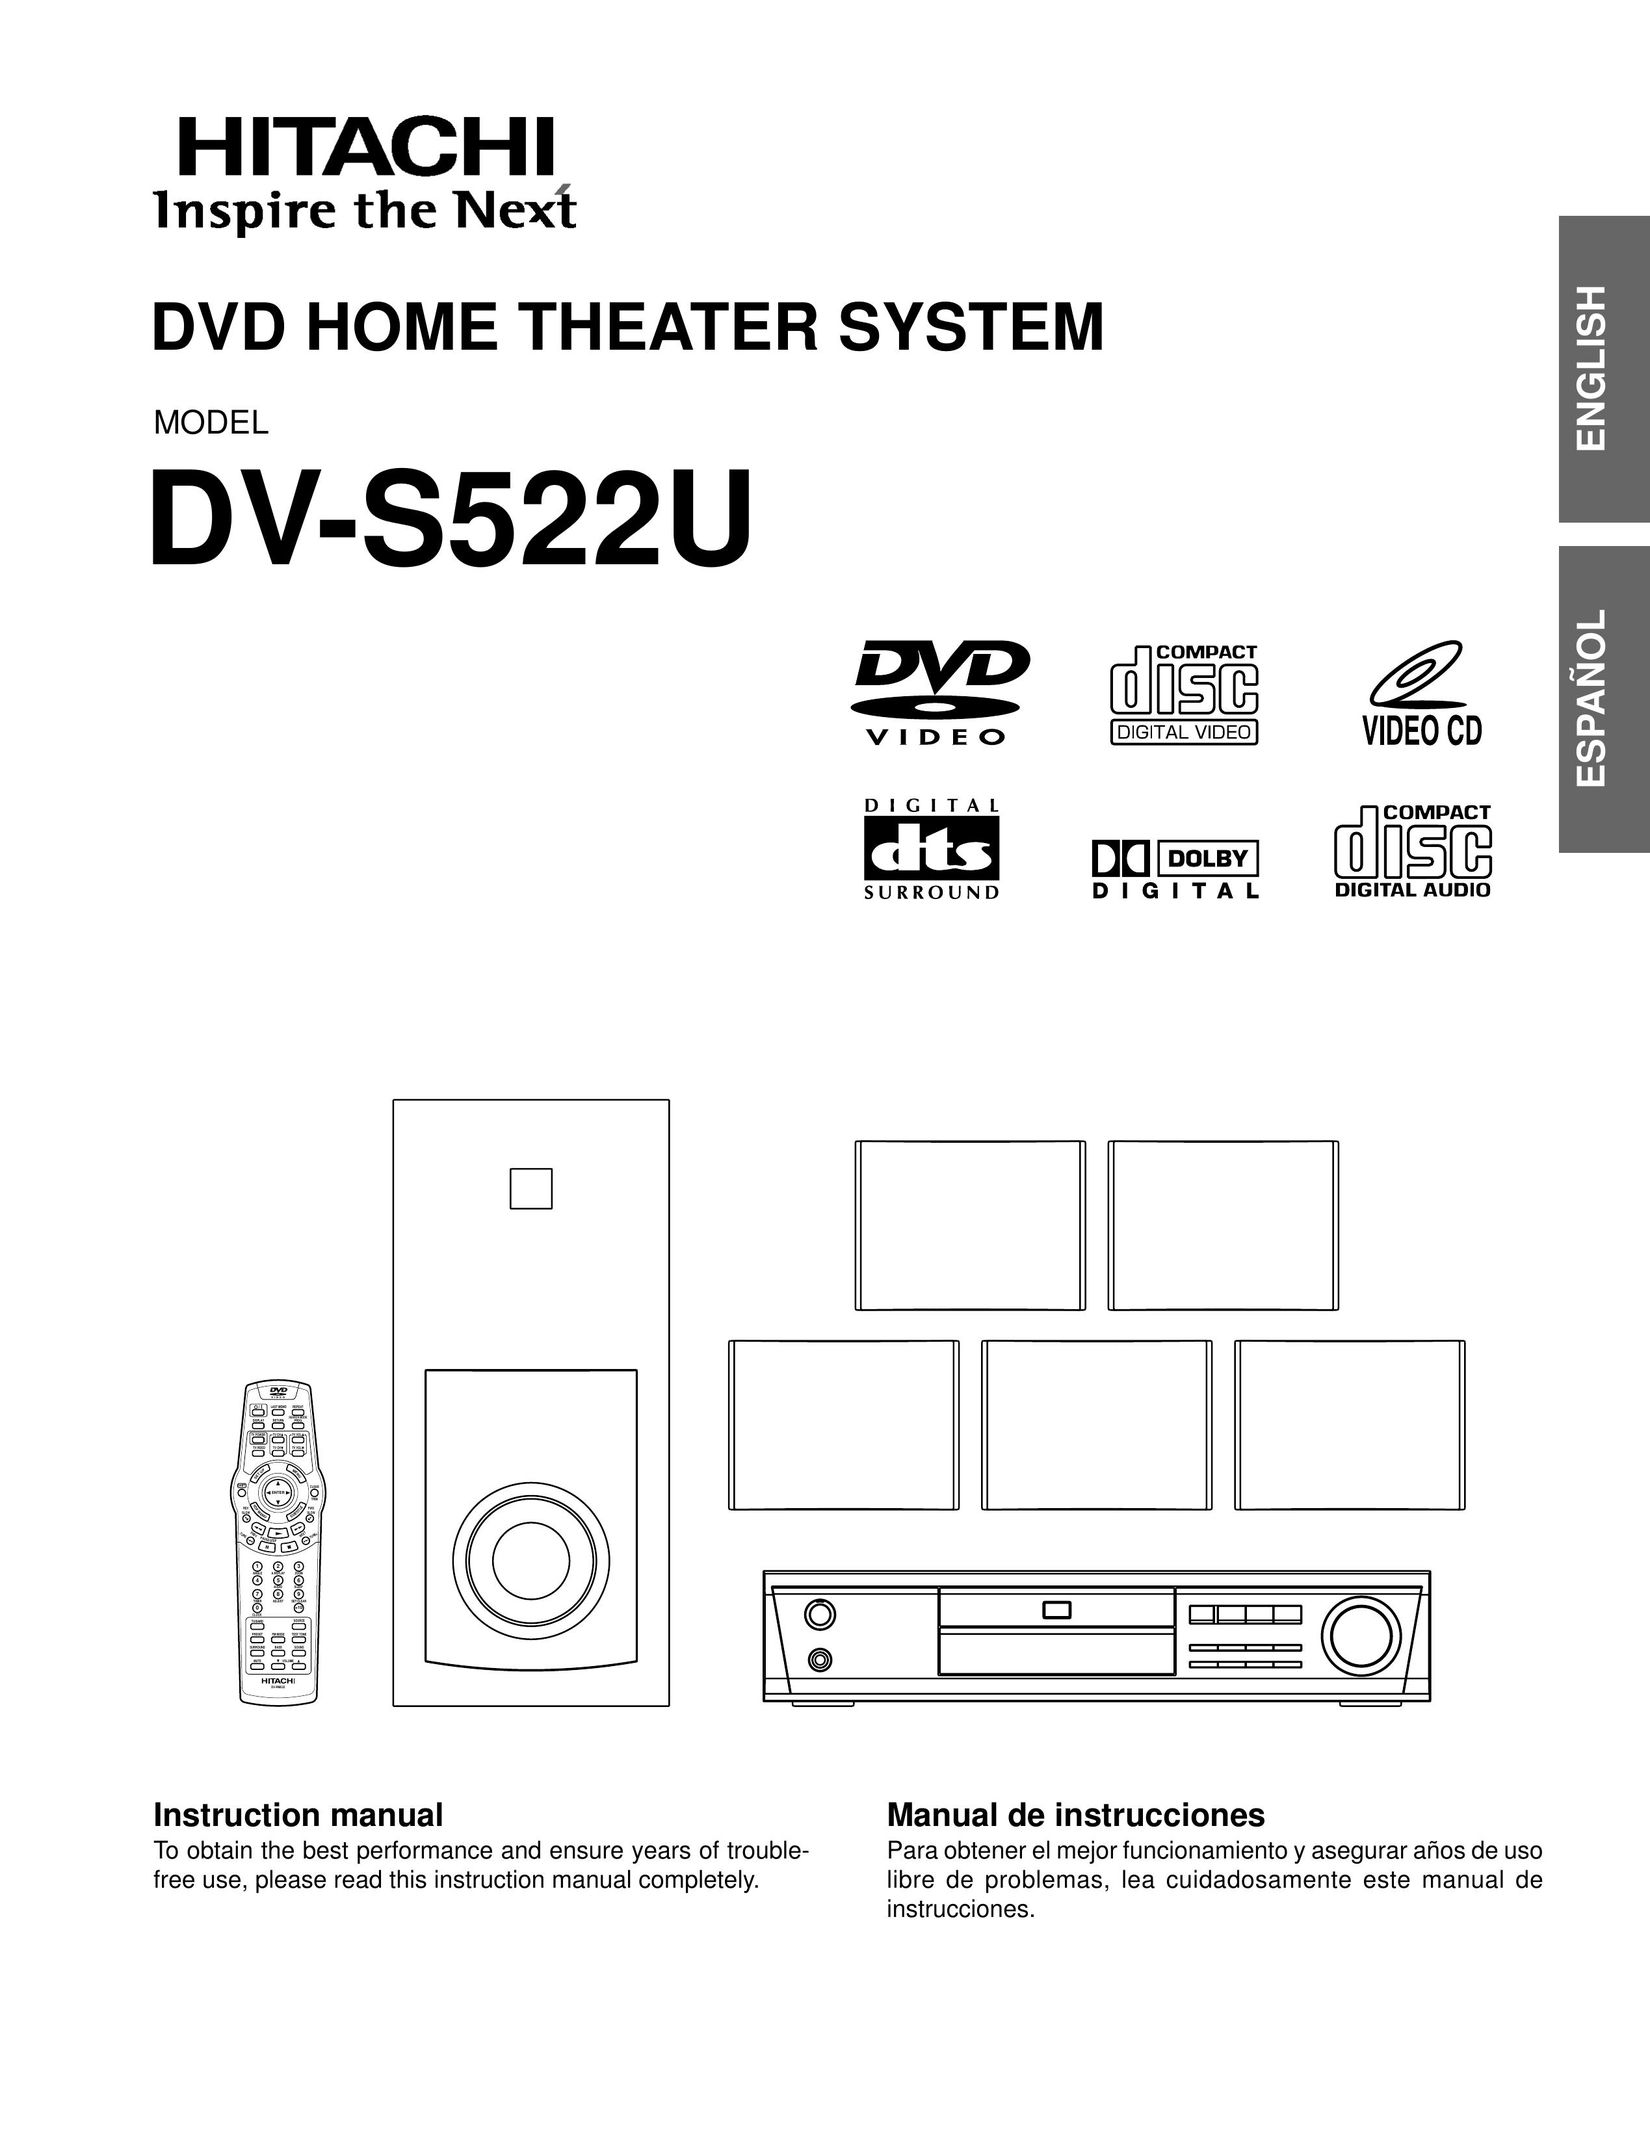 Hitachi DV-S522U Home Theater System User Manual